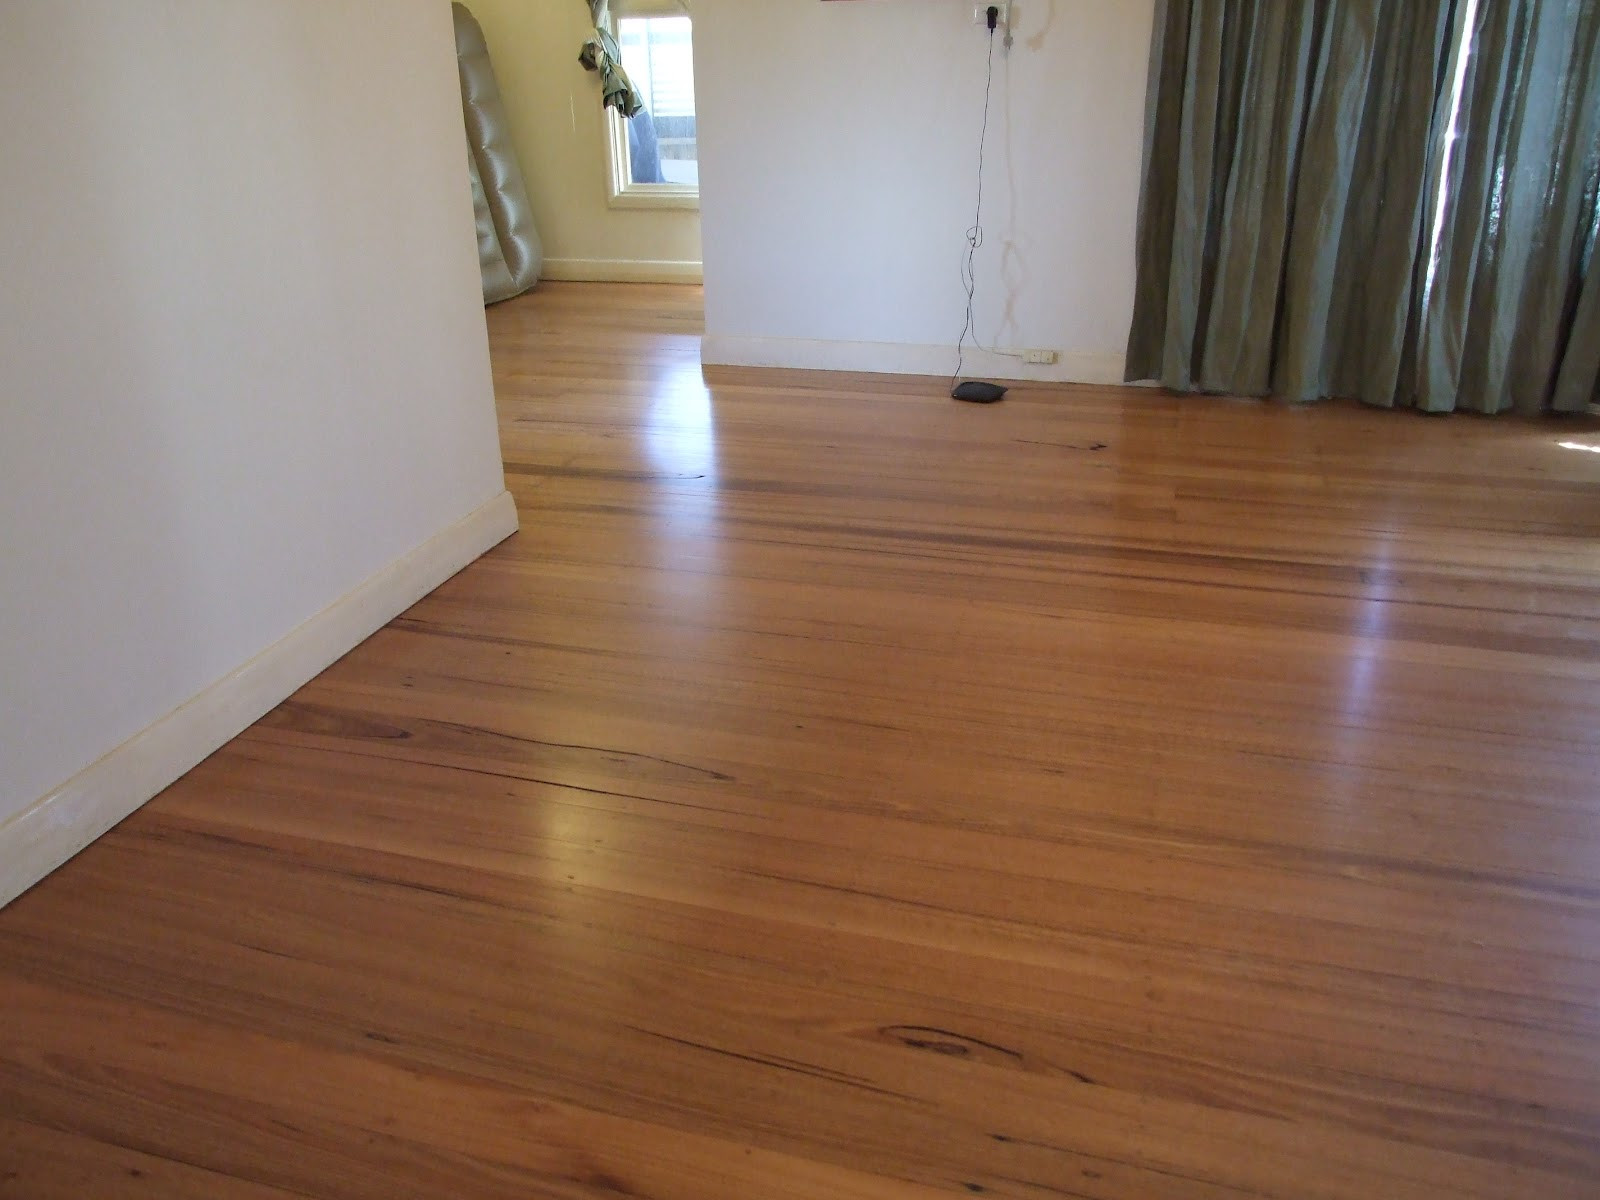 Satin Finish Hardwood Flooring Reviews Of Semi Gloss Polyurethane Floors New The Best Floor Of 2018 In Solving Polyurethane Finishing Problems Today S Homeowner 